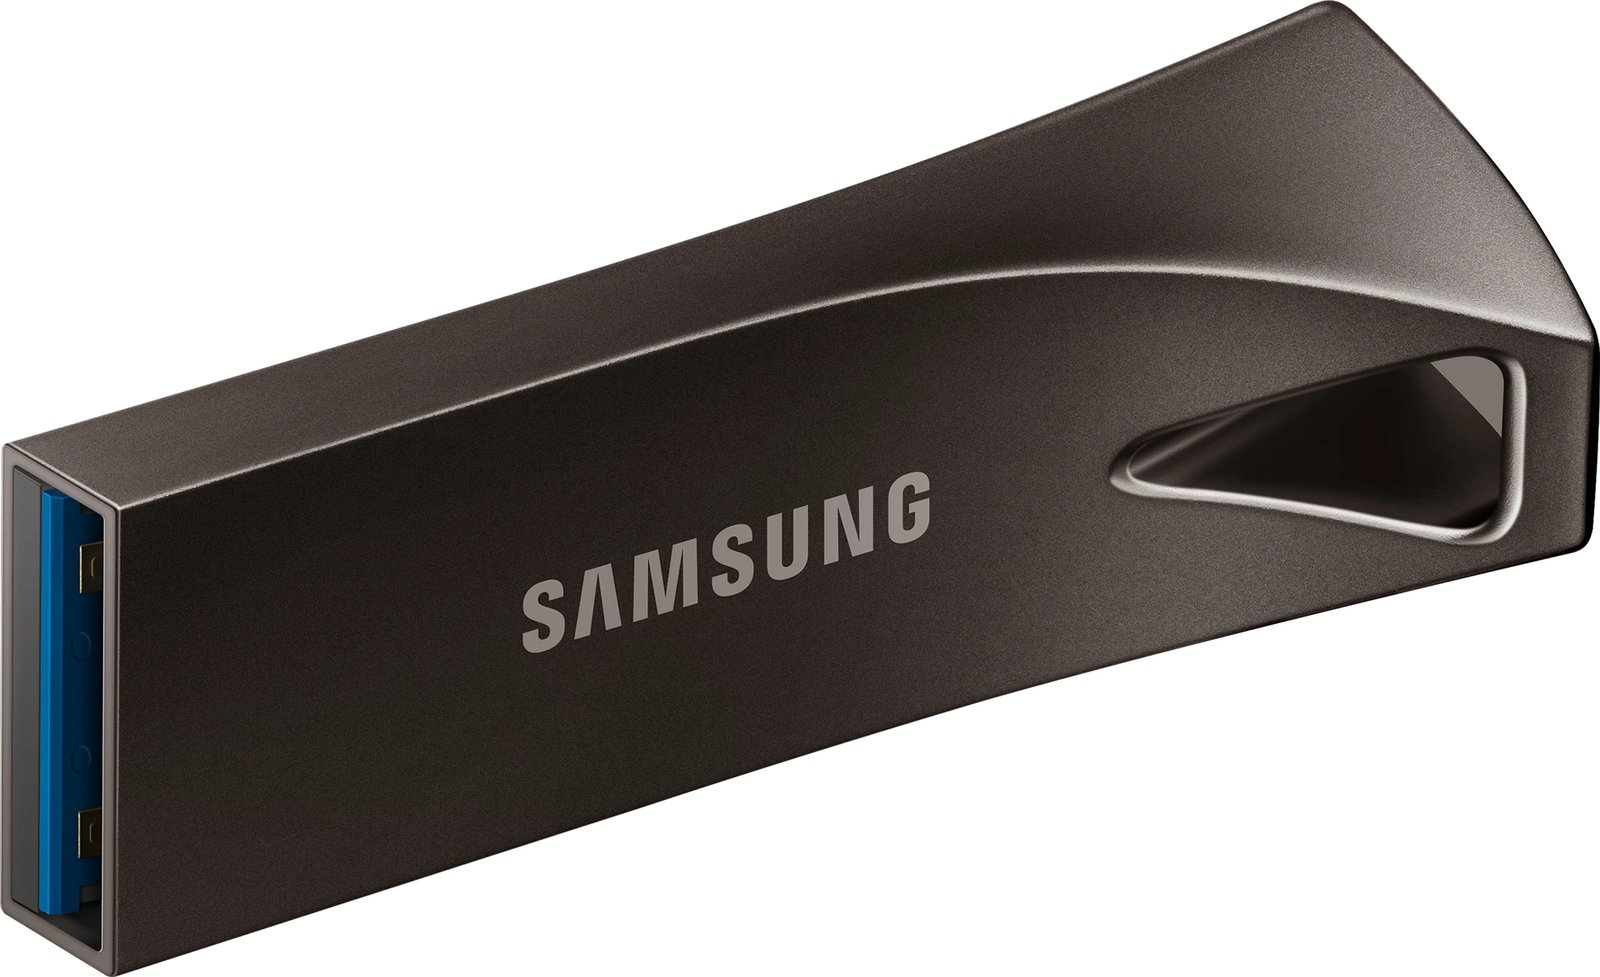 USB Samsung MUF-128BE4, 128 GB